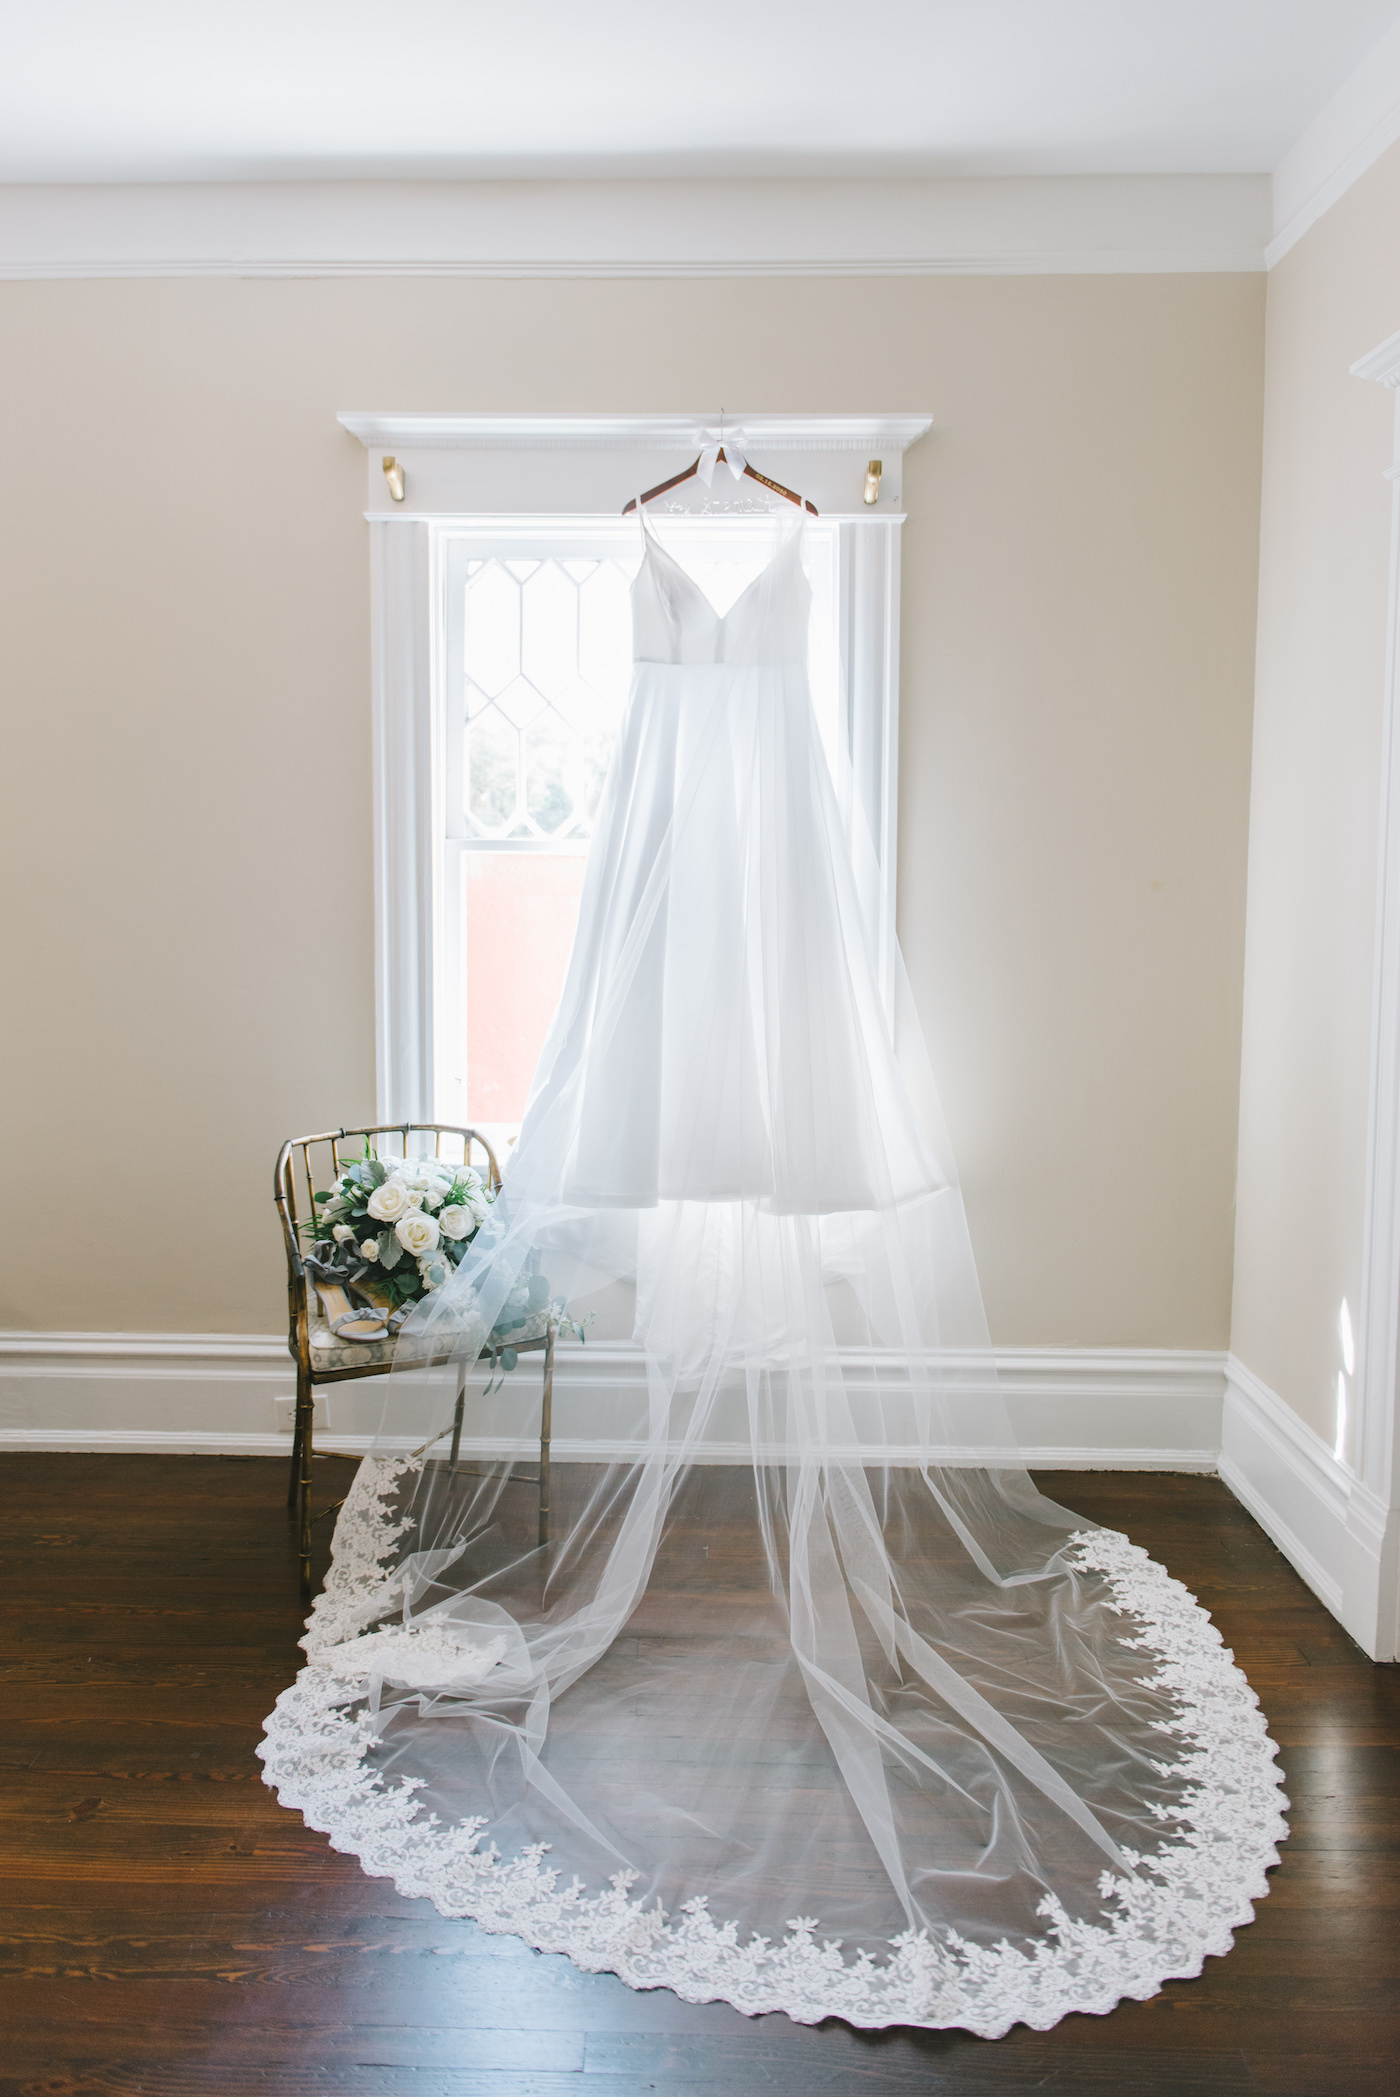 Classic White Spaghetti Strap A-Line Wedding Dress with Full Length Romantic Lace Trim Veil | Tampa Bay Wedding Photographer Kera Photography